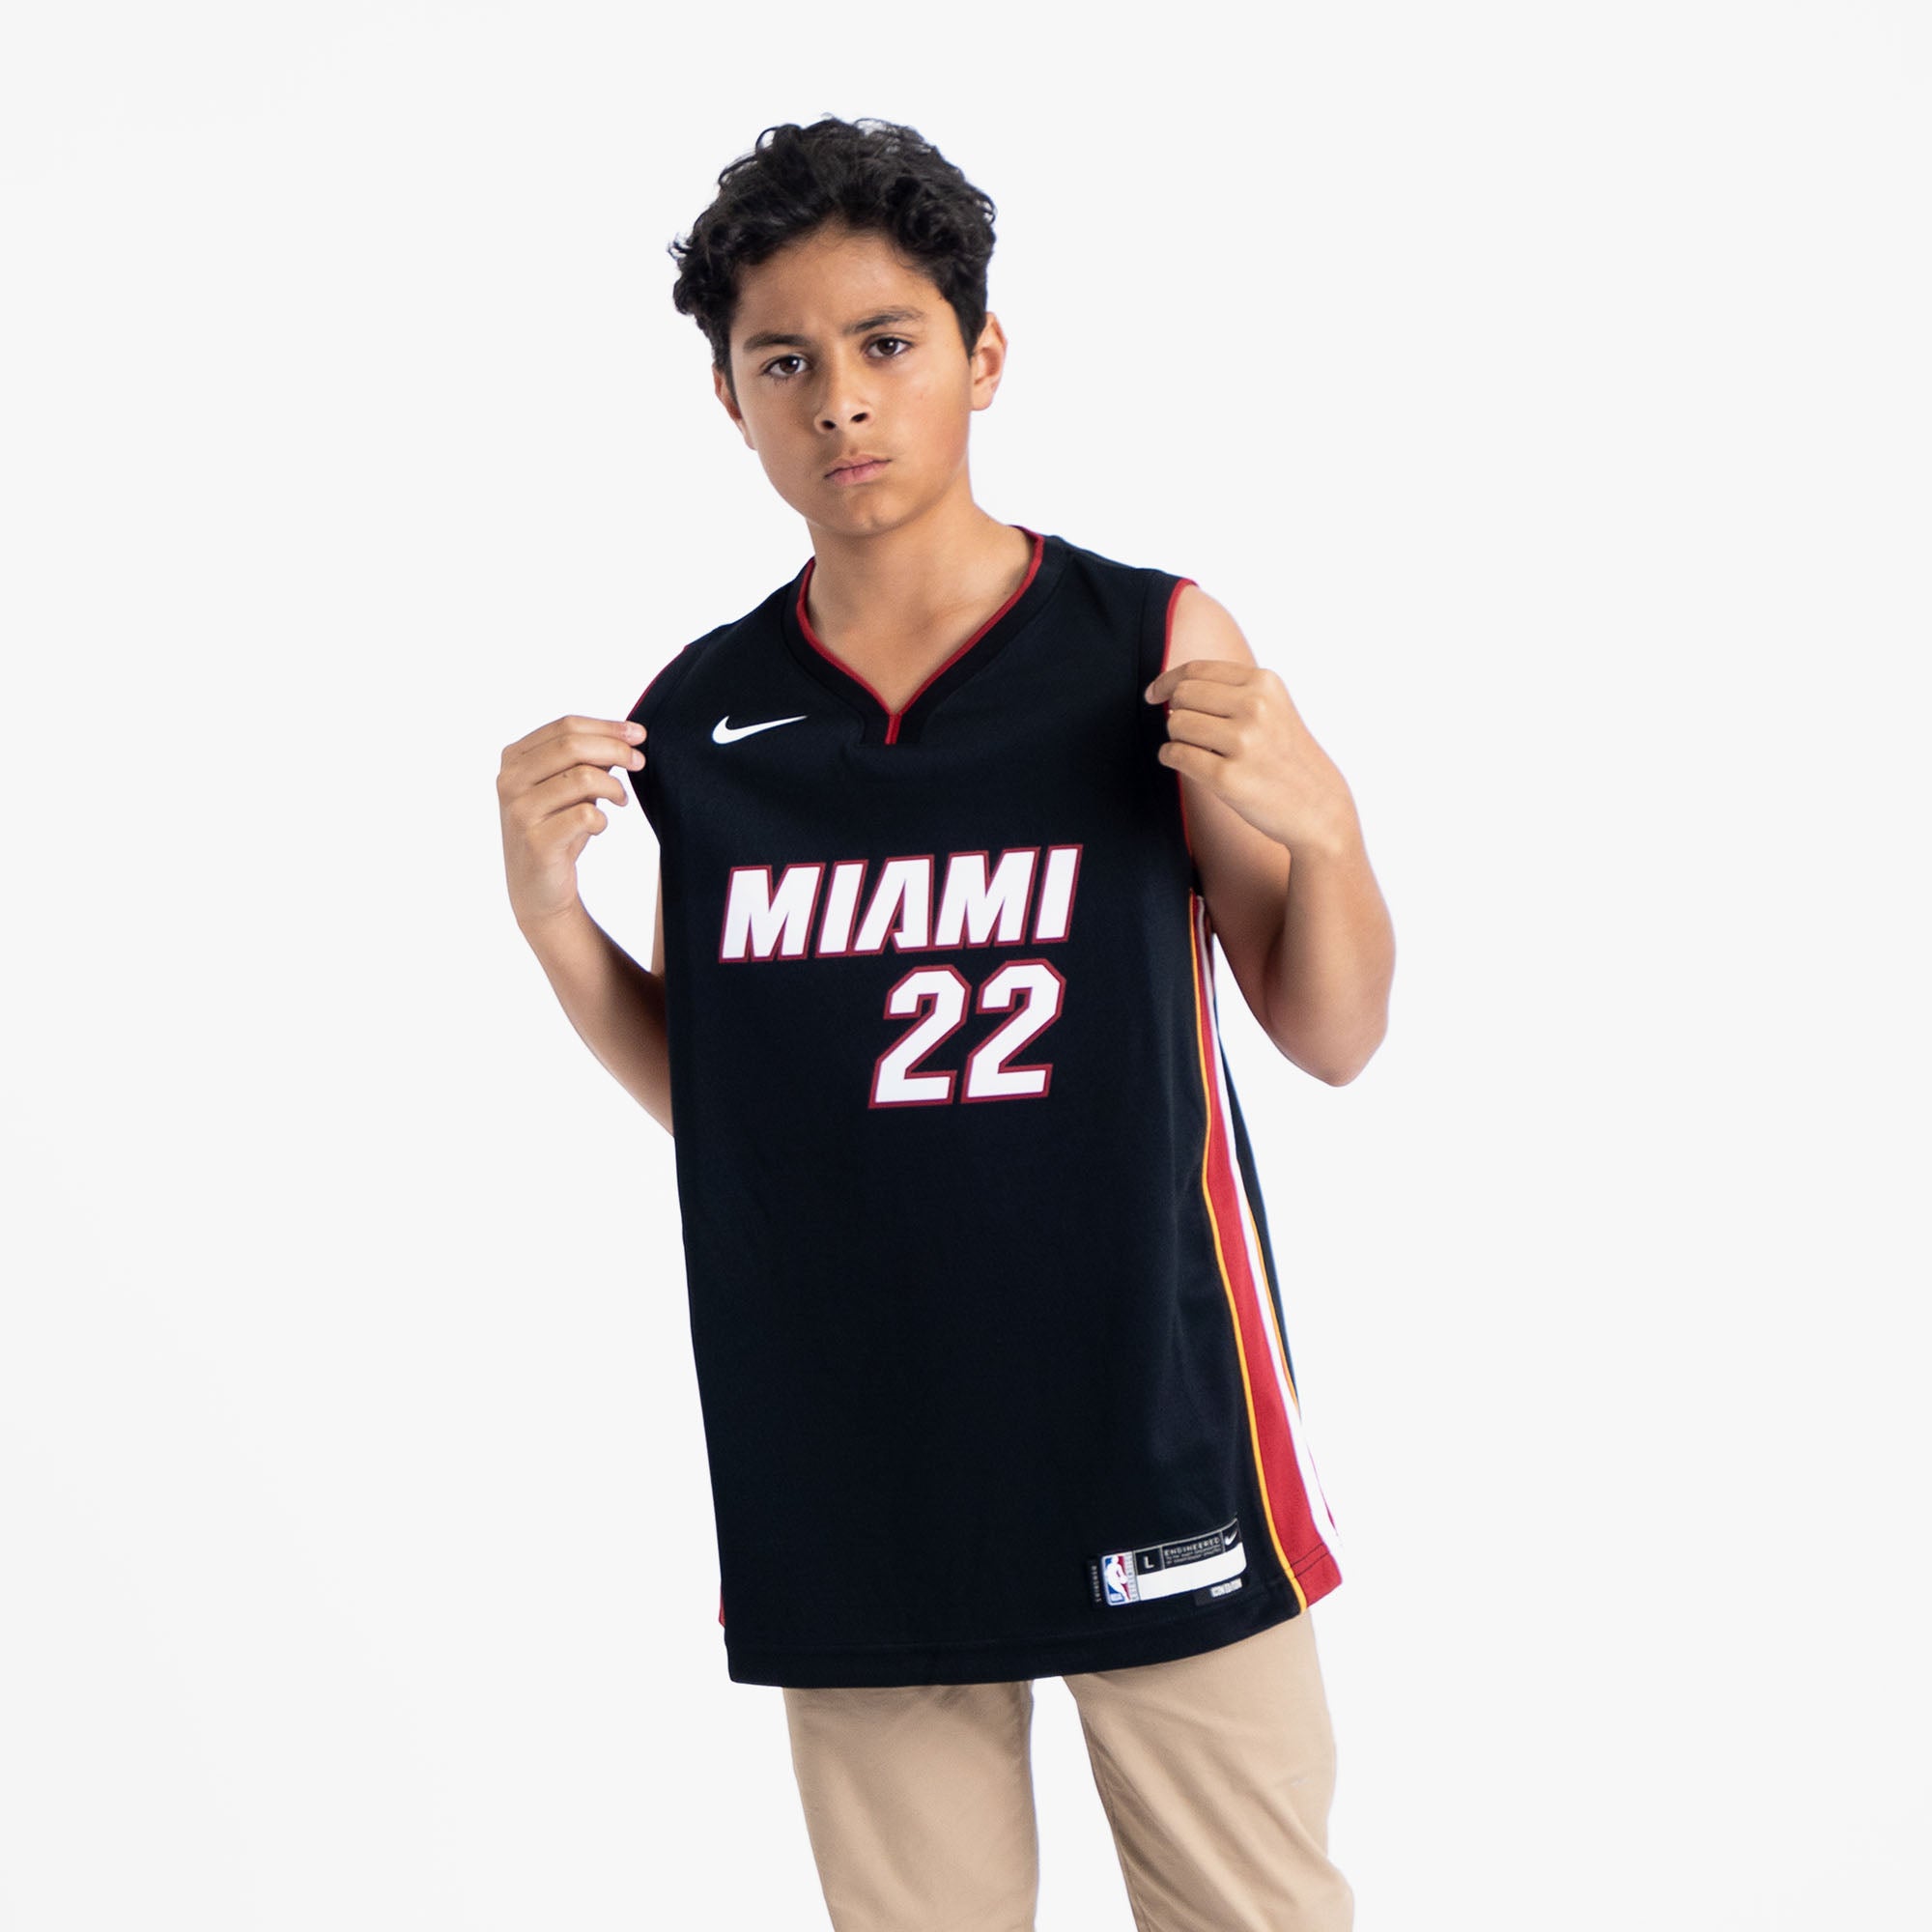 Miami Heat Icon Edition 2022/23 Nike Dri-FIT NBA Swingman Jersey.